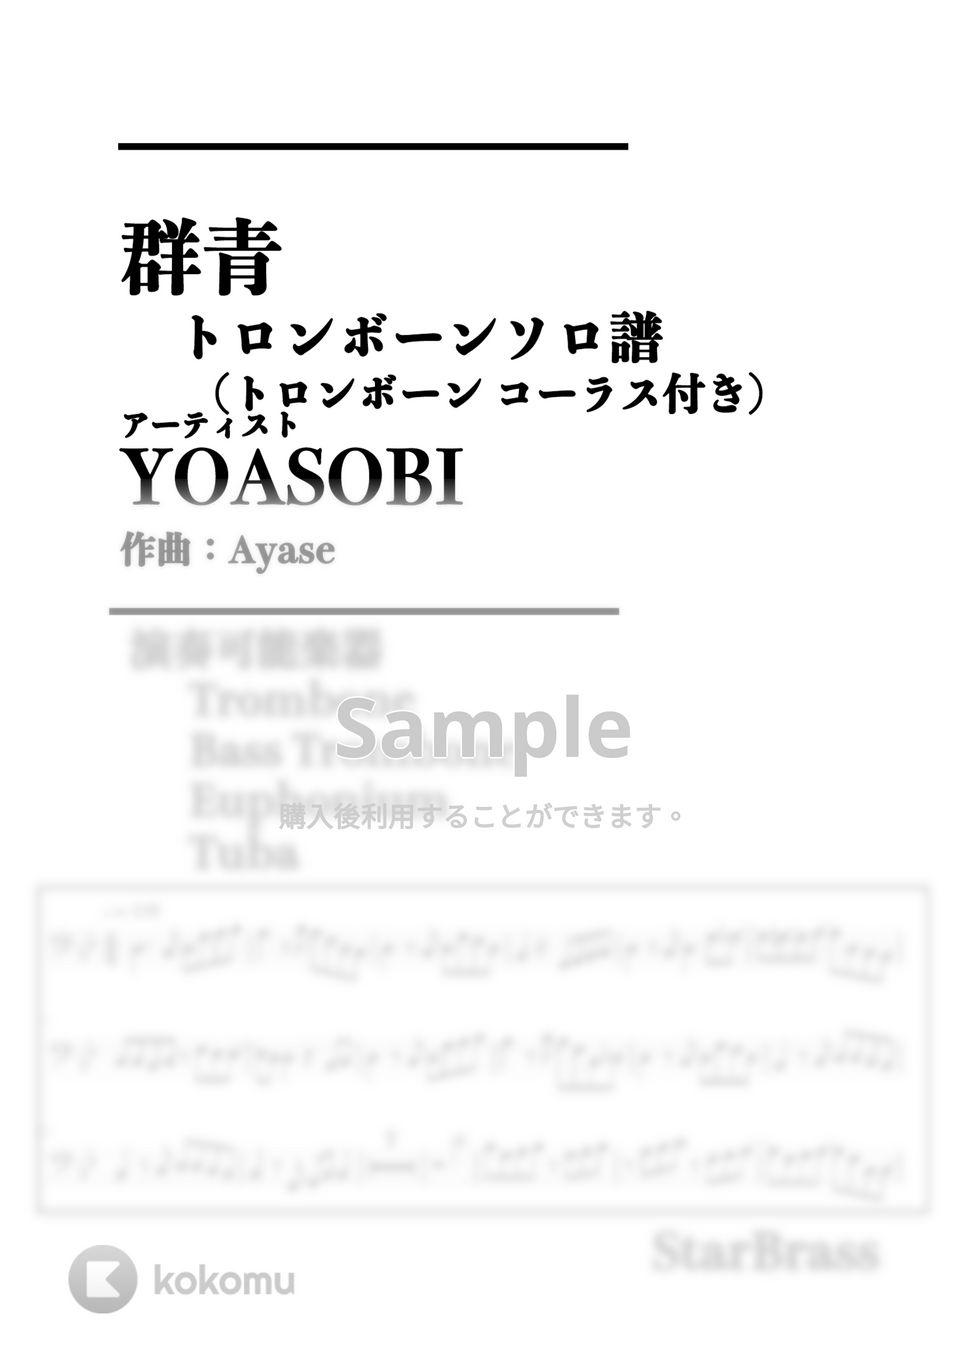 YOASOBI - 群青 (-Trombone Solo- コーラスパート付き / 原キー) by Creampuff